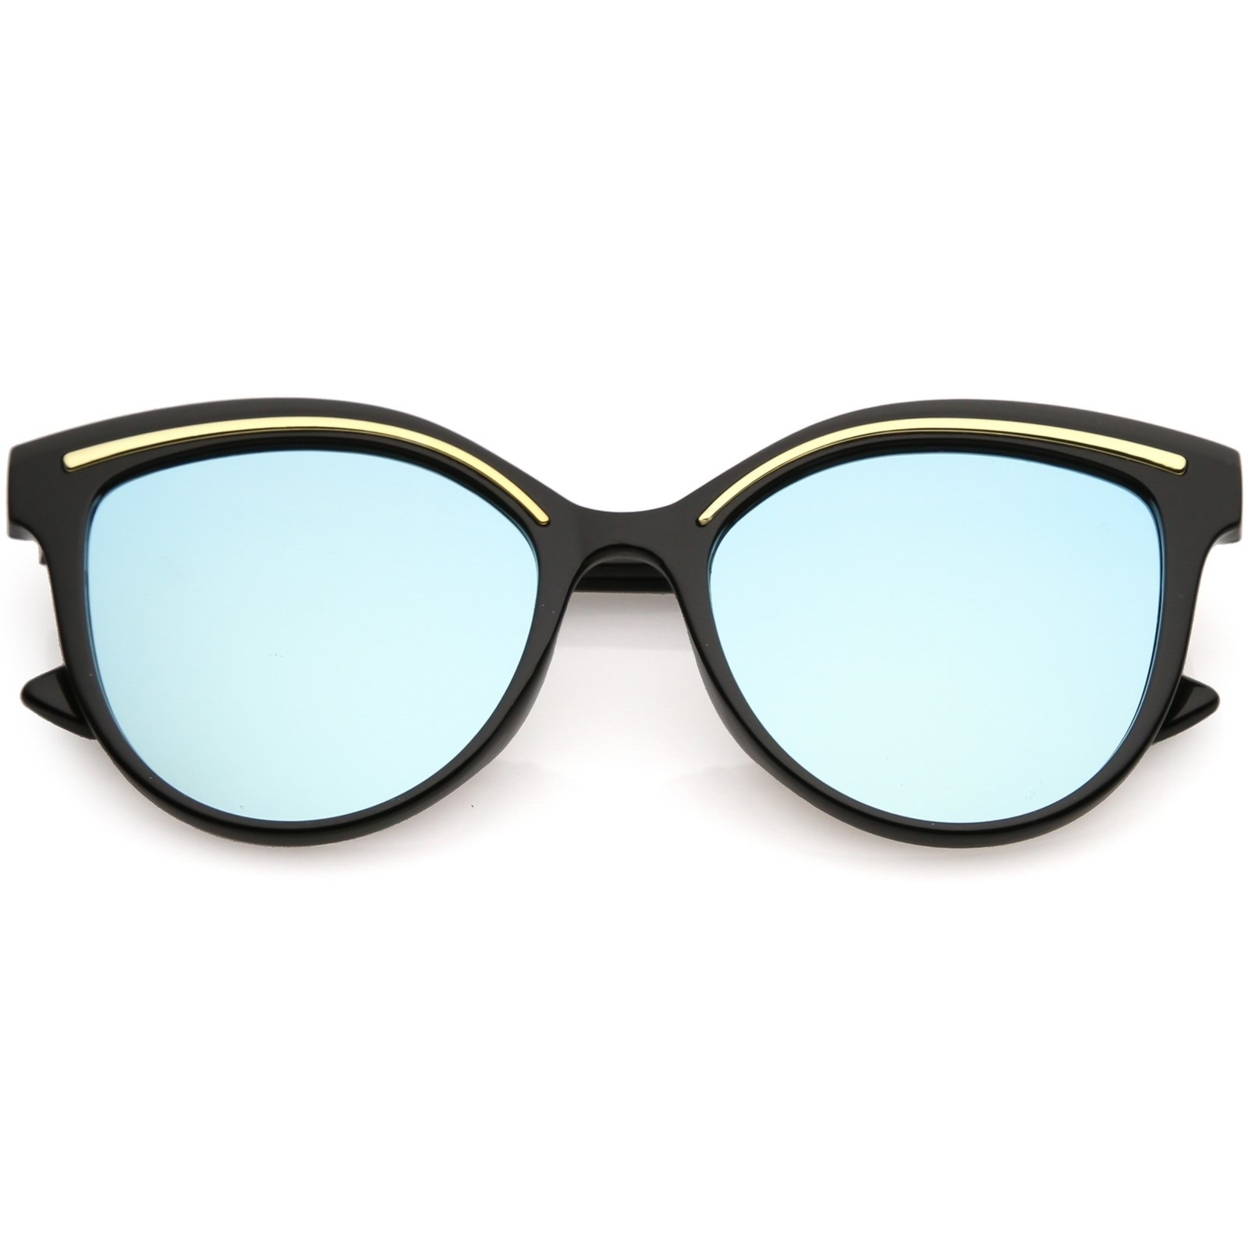 Modern Cat Eye Sunglasses Metal Brow Detail Round Colored Mirror Flat Lens 53mm - Black Silver / Silver Mirror